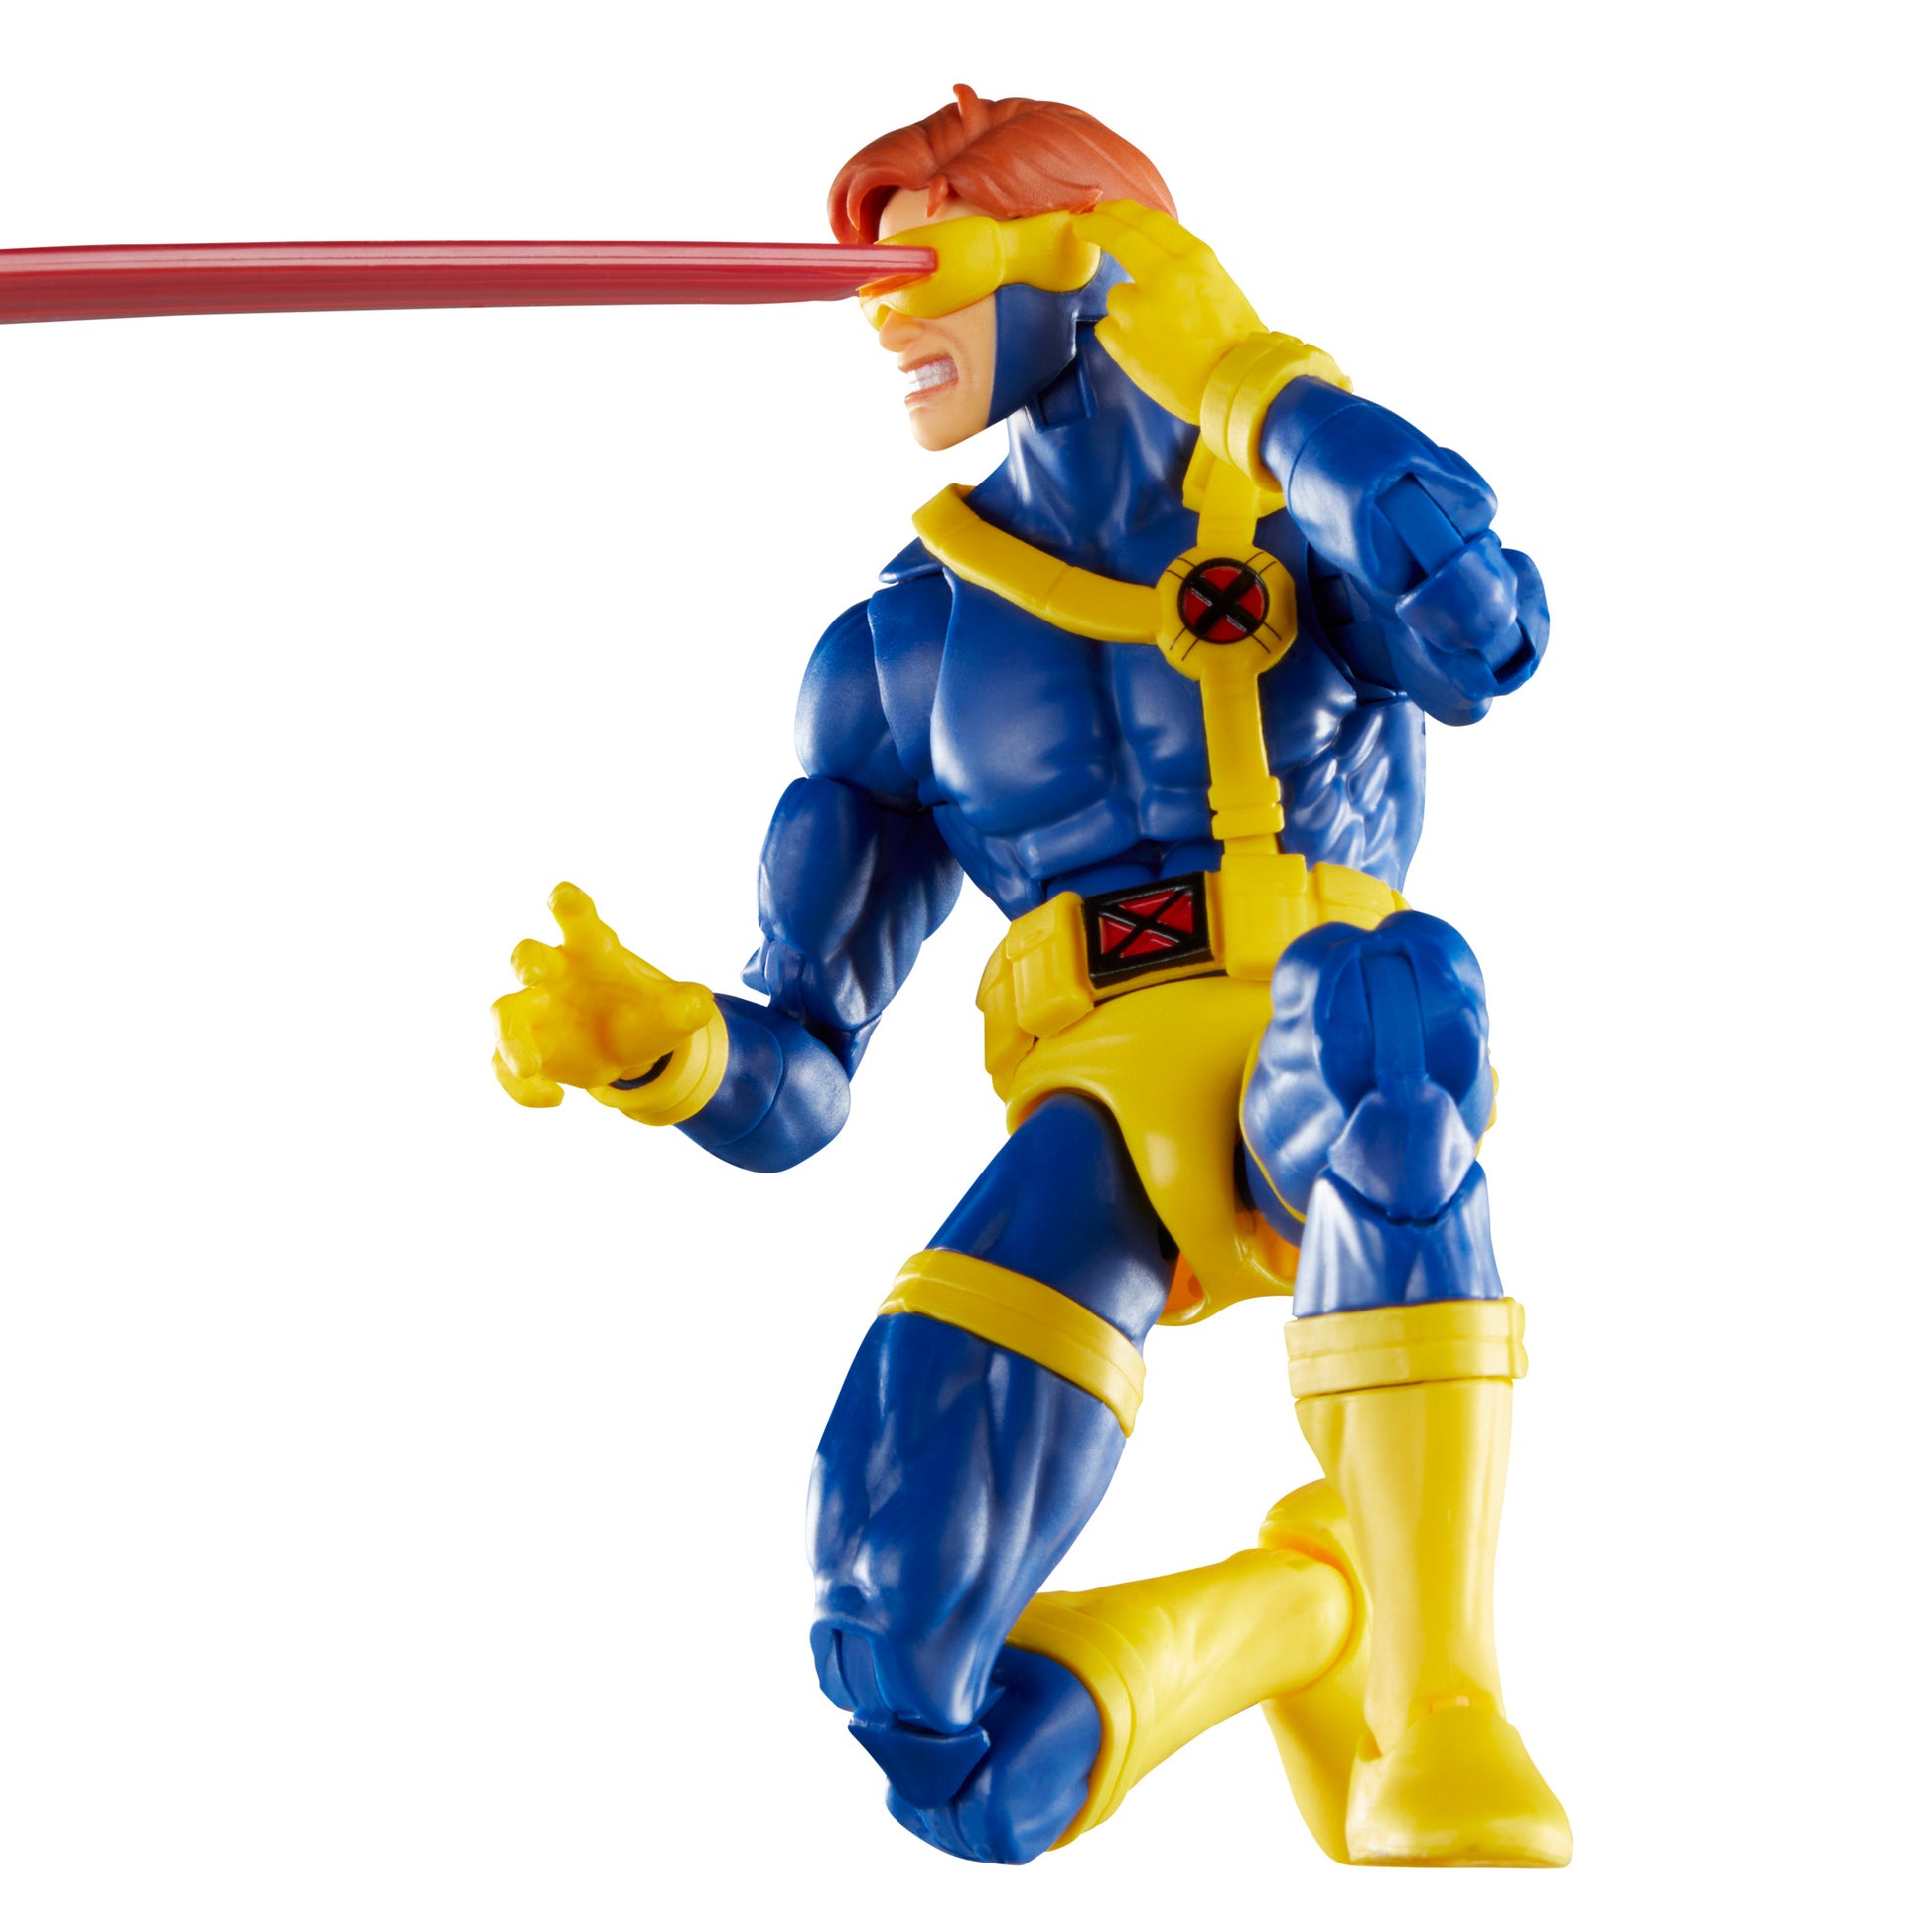 Marvel Legends Series Cyclops, X-Men ‘97 Collectible 6 Inch Action Figure